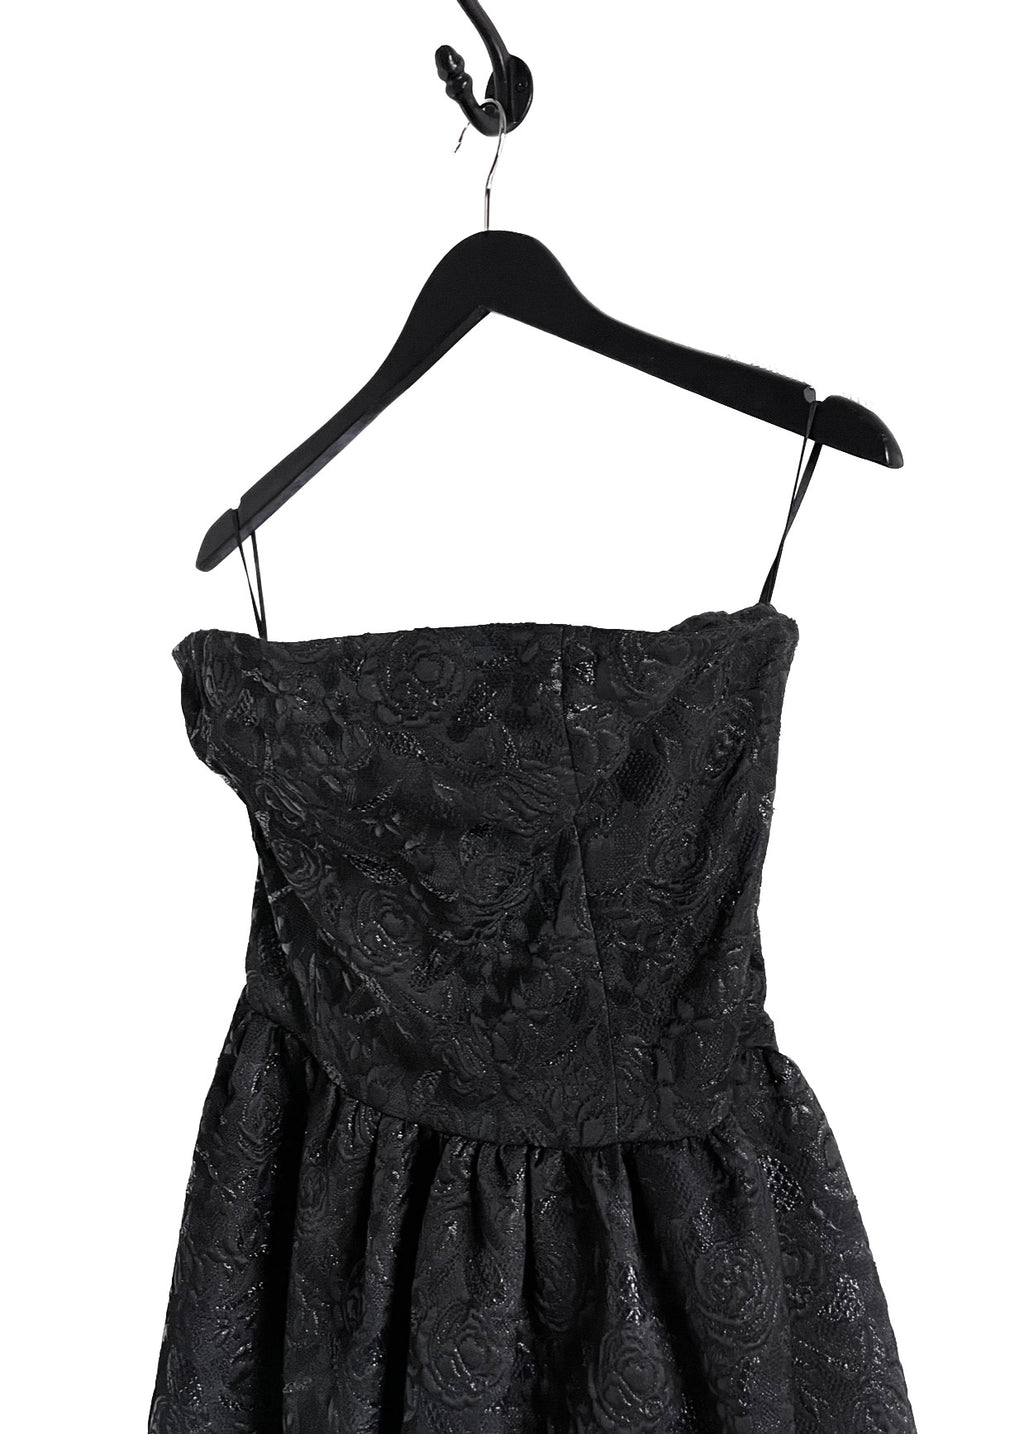 Prada 2010 Black Floral Jacquard Strapless Bustier Dress